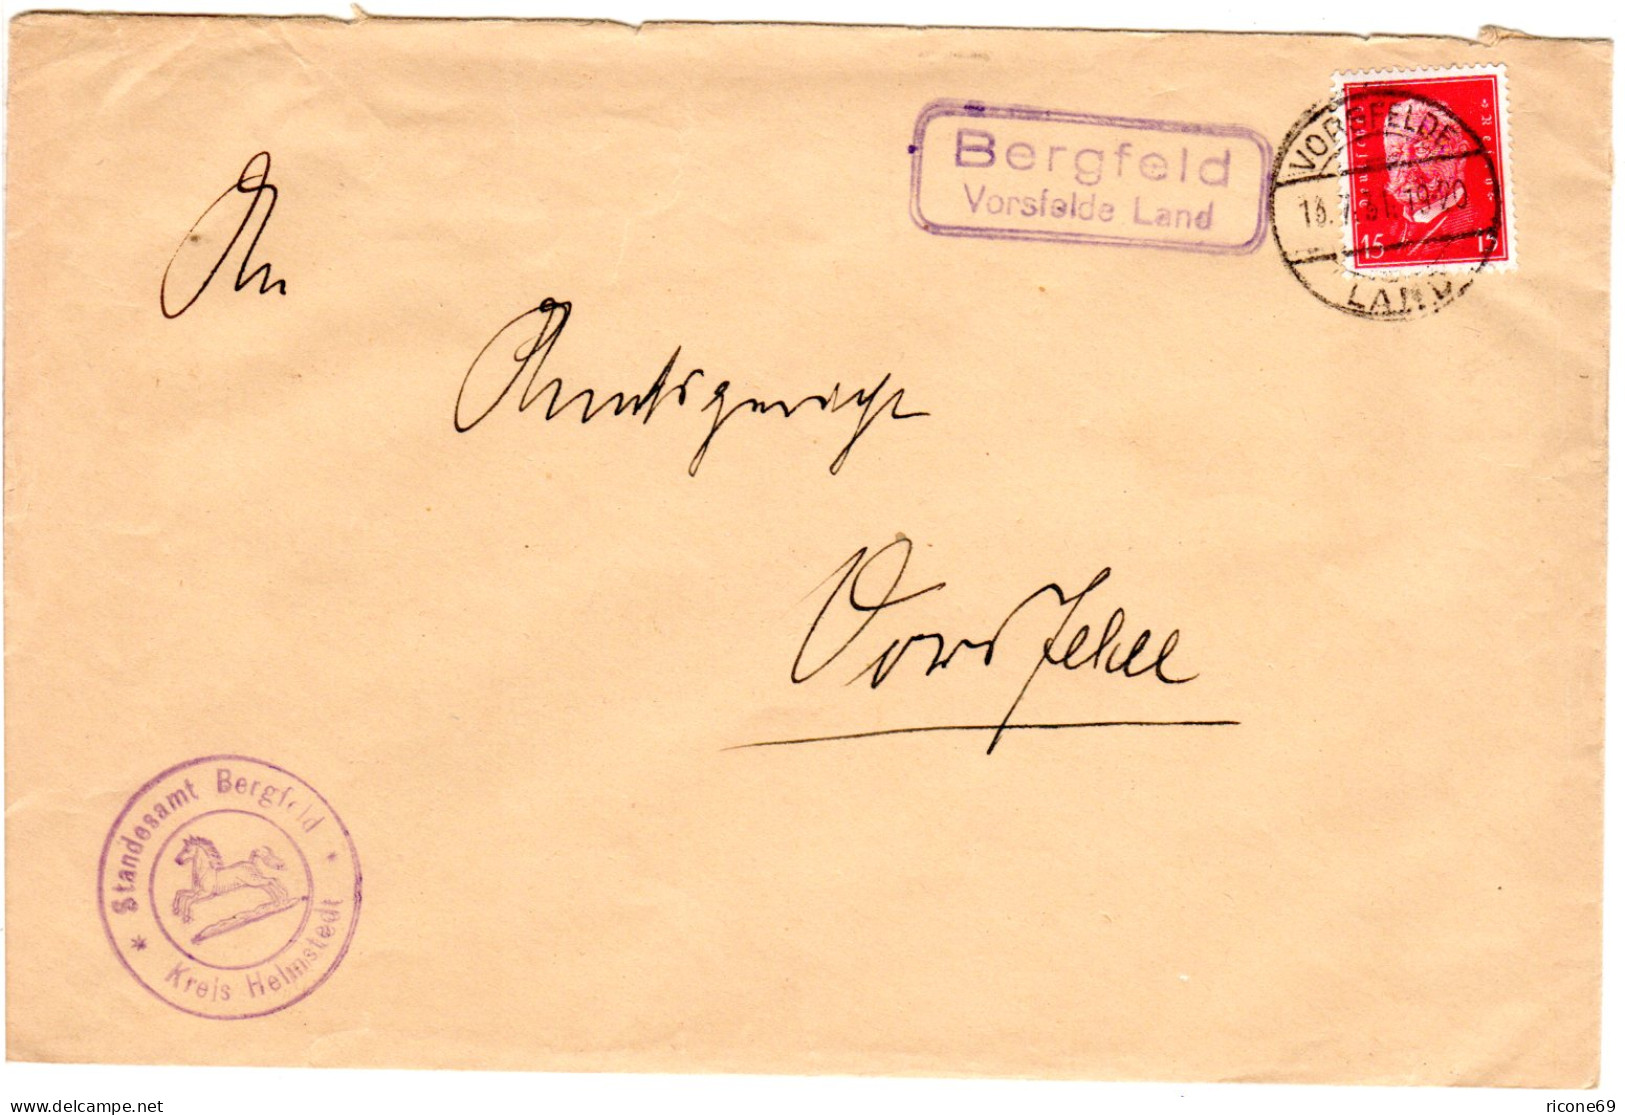 DR 1931, Landpoststpl. BERGFELD Vorsfelde Land Auf Brief M. 15 Pf. - Covers & Documents